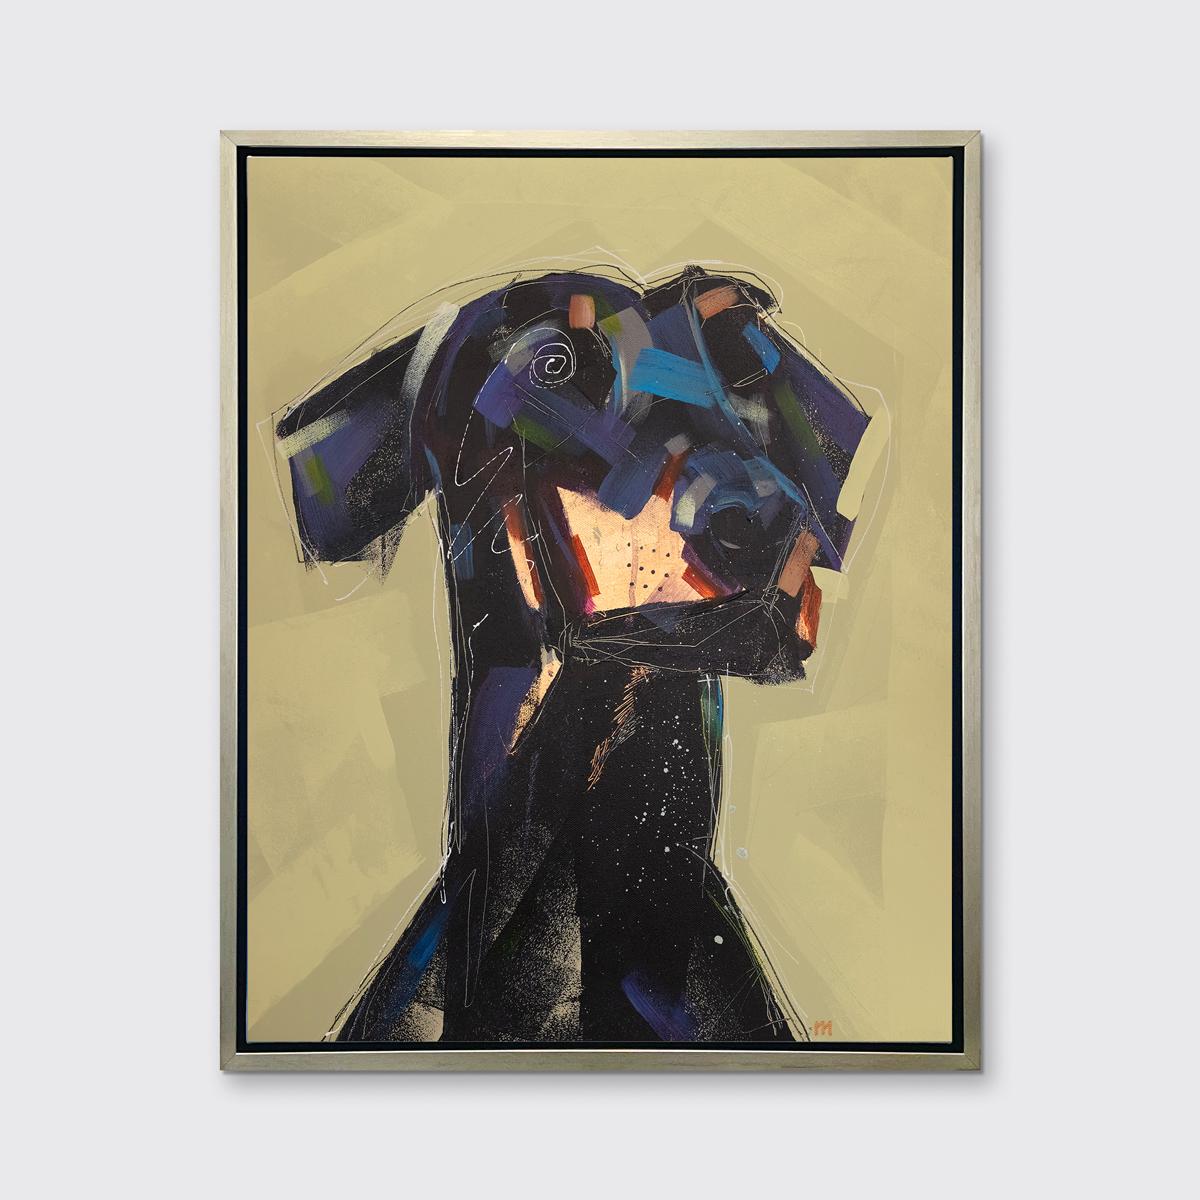 Abstract Print Russell Miyaki - "Doberman" Impression giclée en édition limitée, 30" x 24"